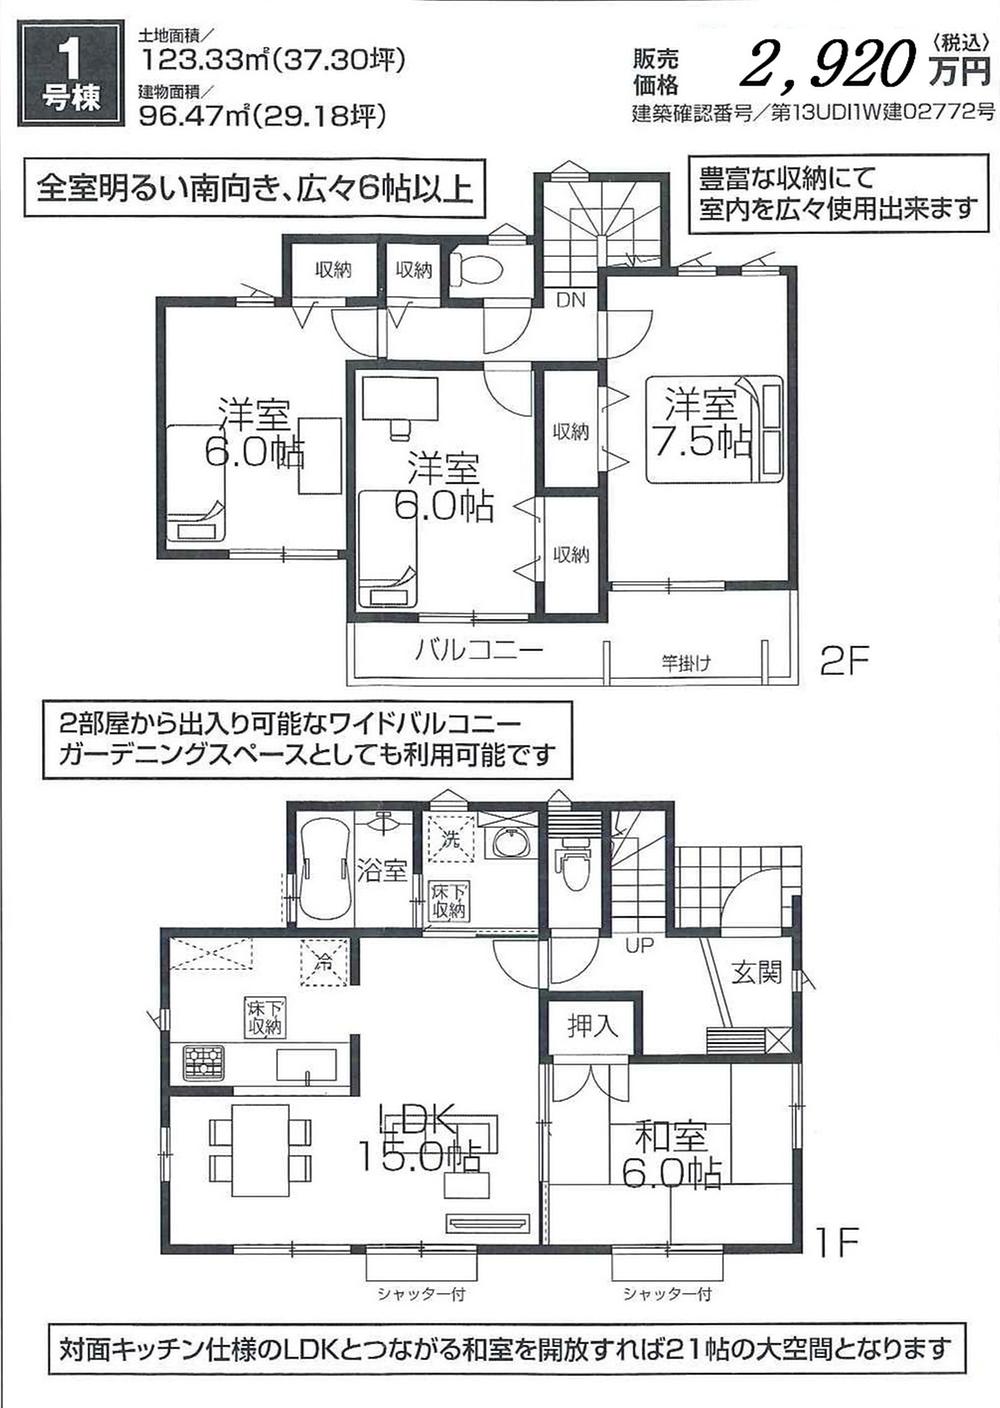 Floor plan. 29,200,000 yen, 4LDK, Land area 123.33 sq m , Building area 96.47 sq m